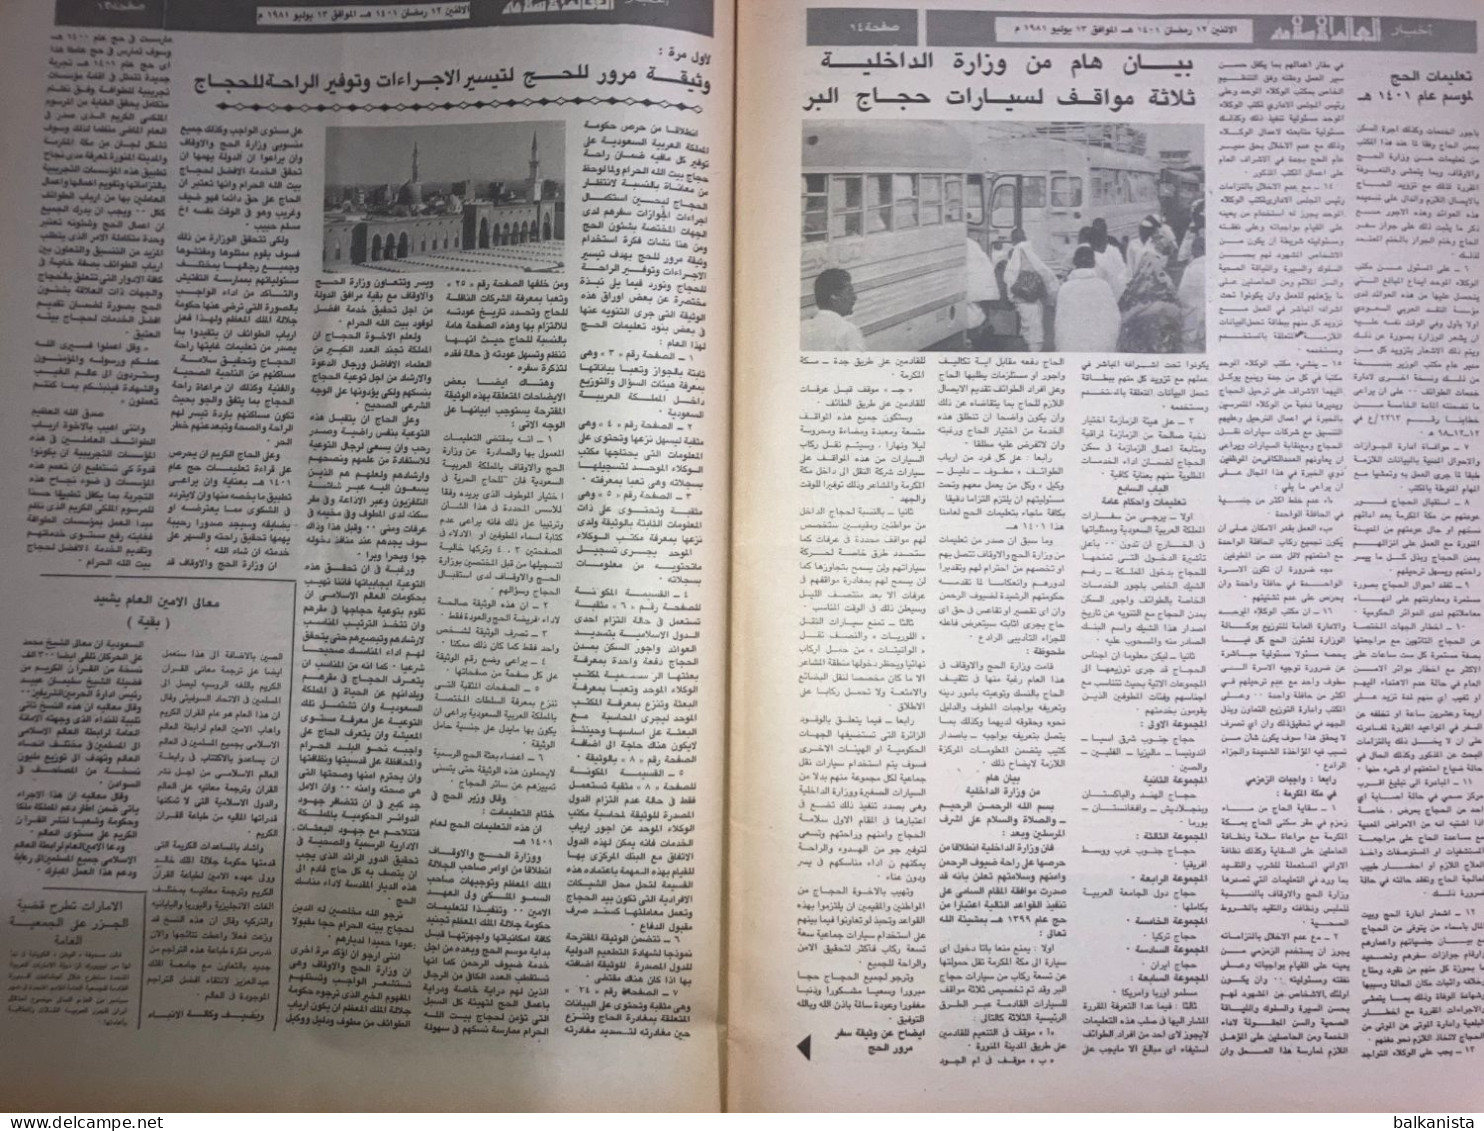 Saudi Arabia Akhbar al-Alam al-Islami Newspaper 13 July 1981